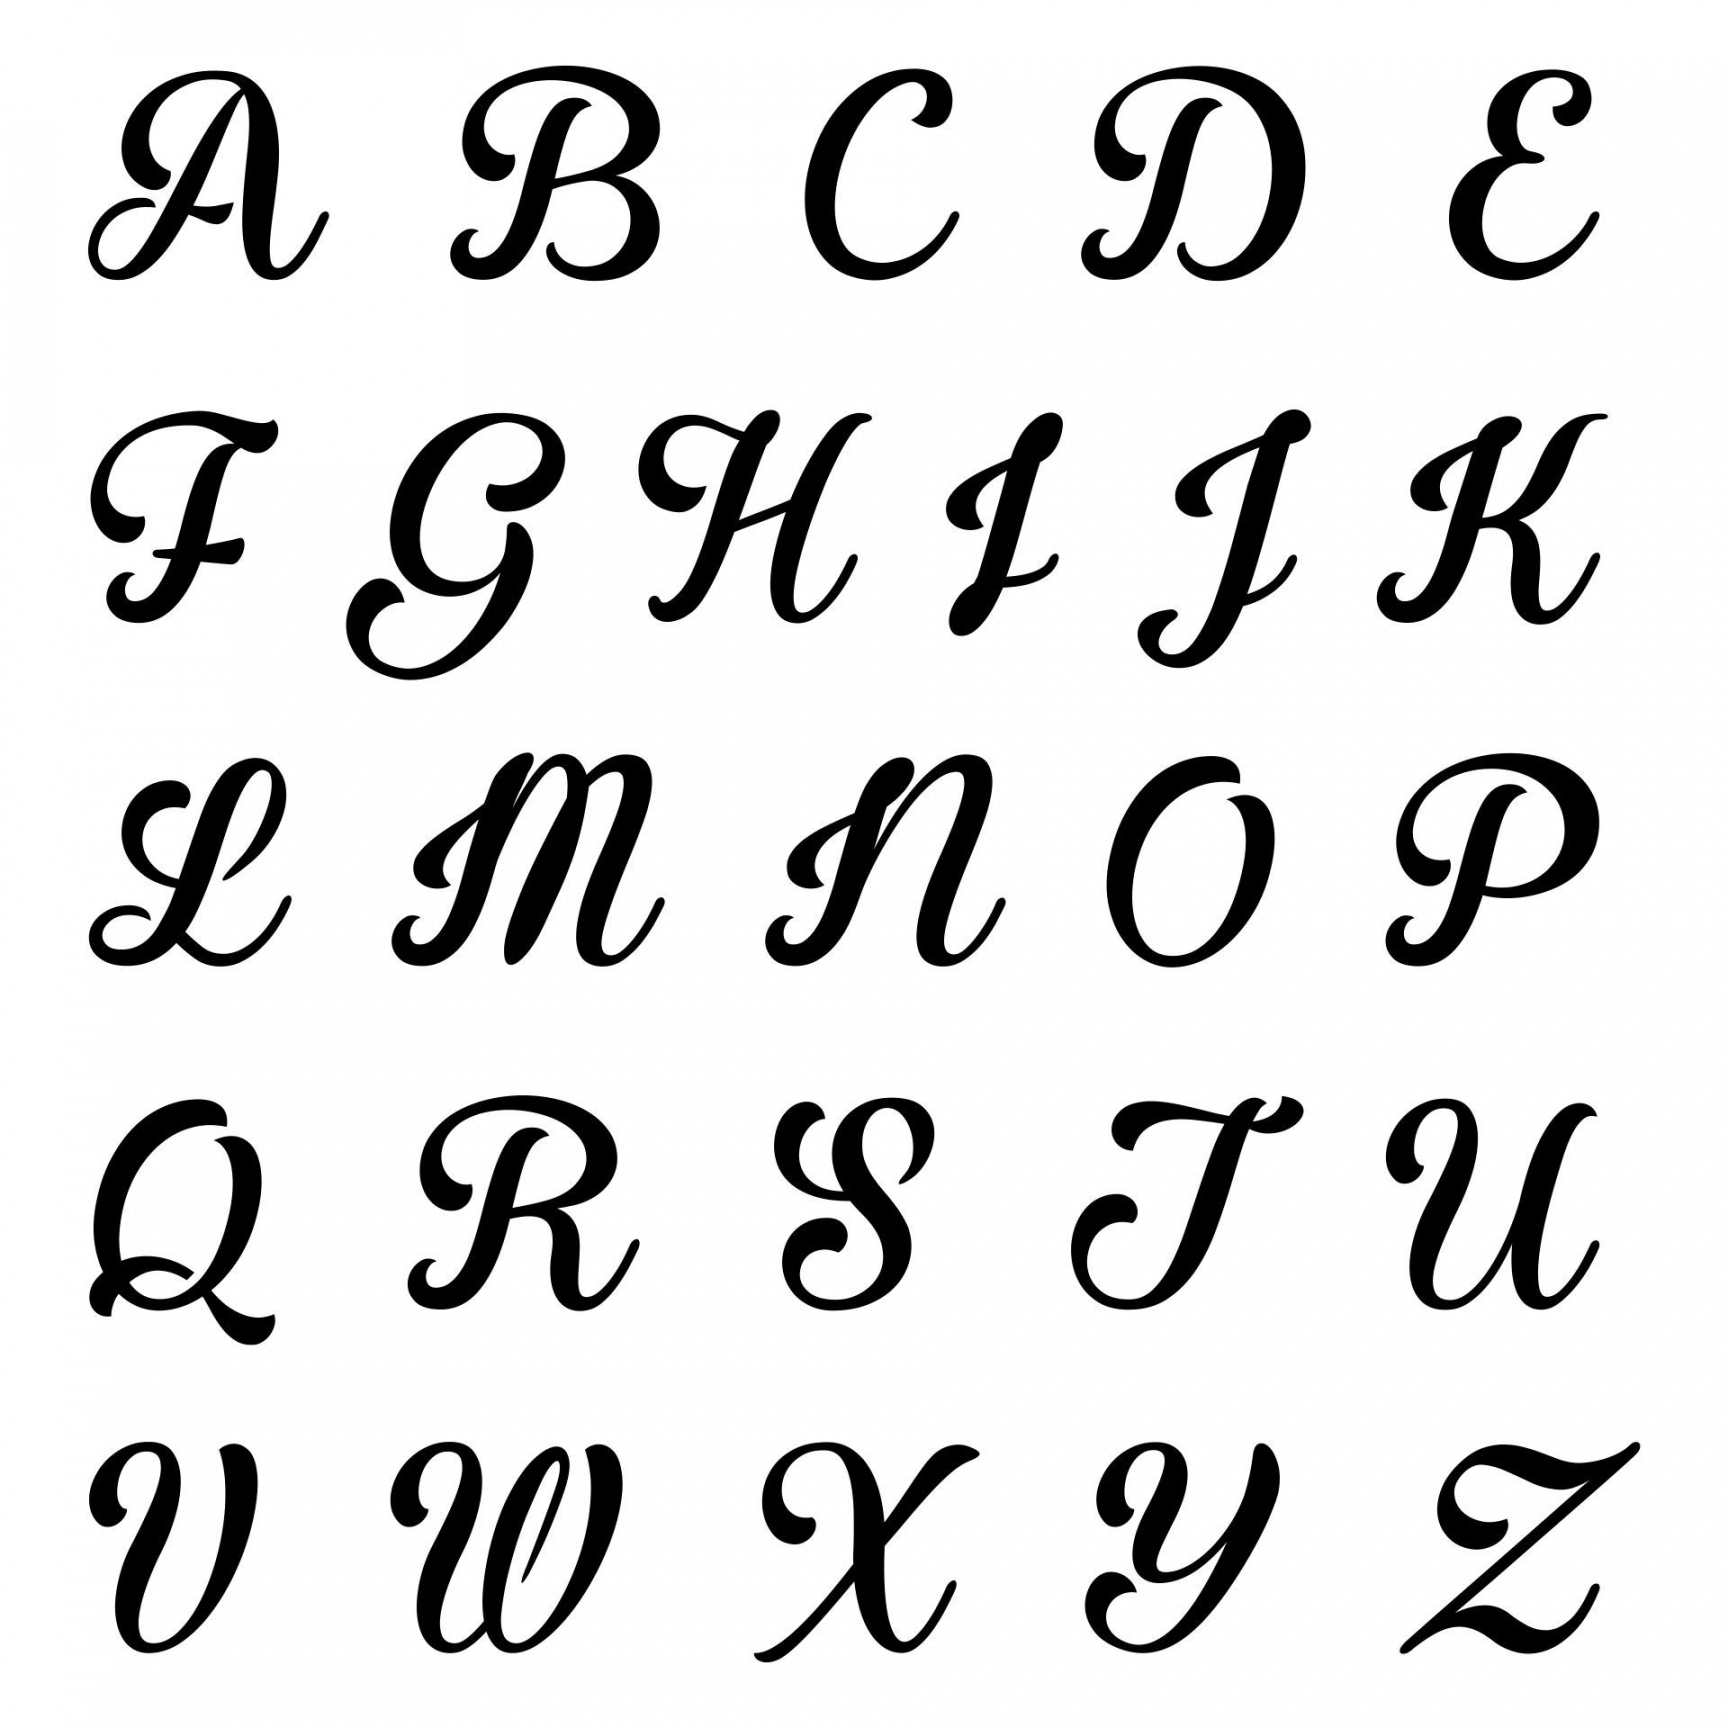 Fancy Letter Stencils Free Printable - Printable - Free Printable Fancy Letter Stencils  Free printable letter